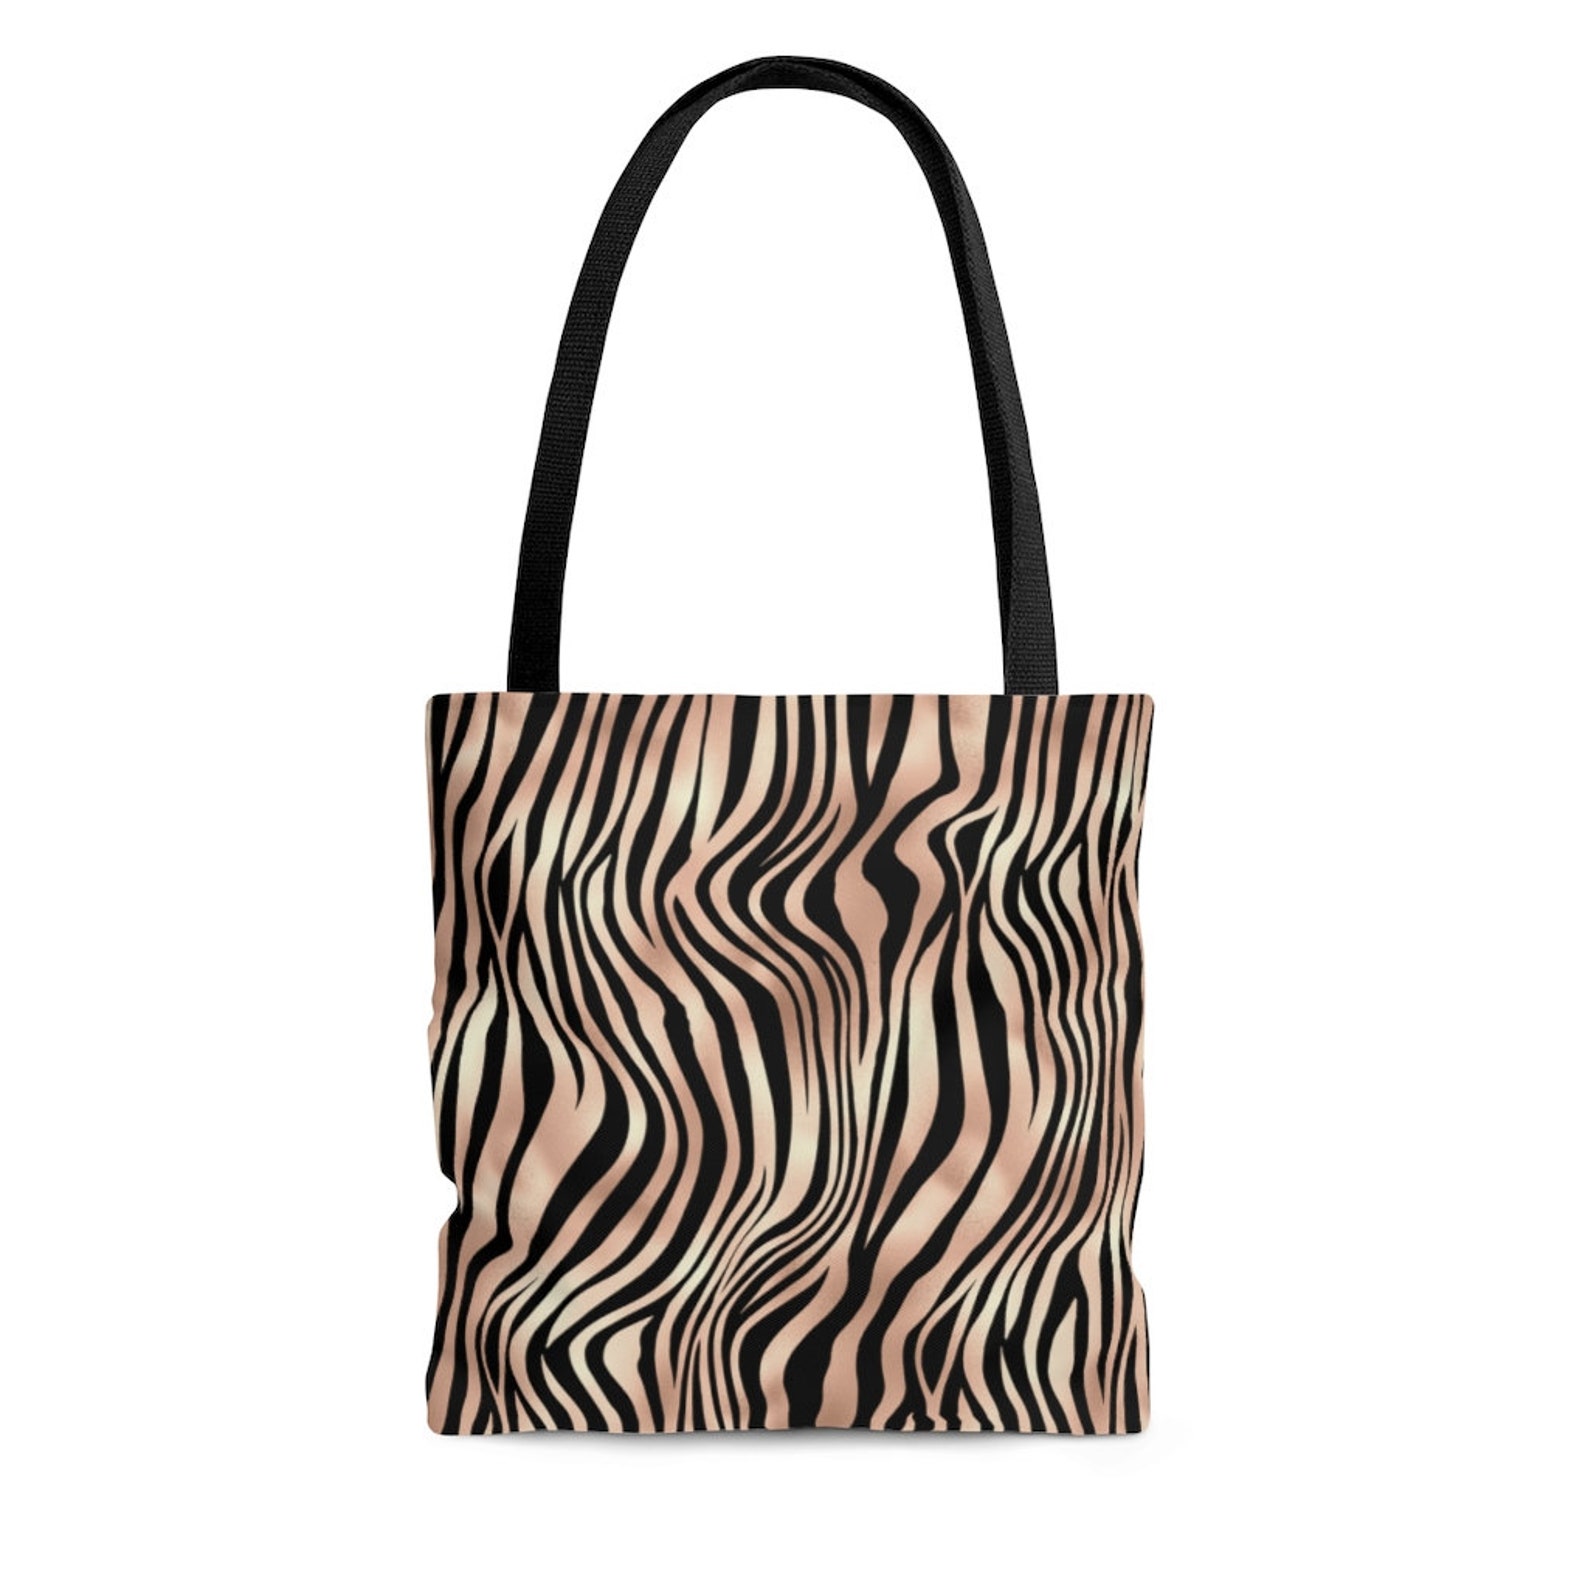 Safari Print Tote Bag Gorgeous Animal Print Tote Bag Gift | Etsy